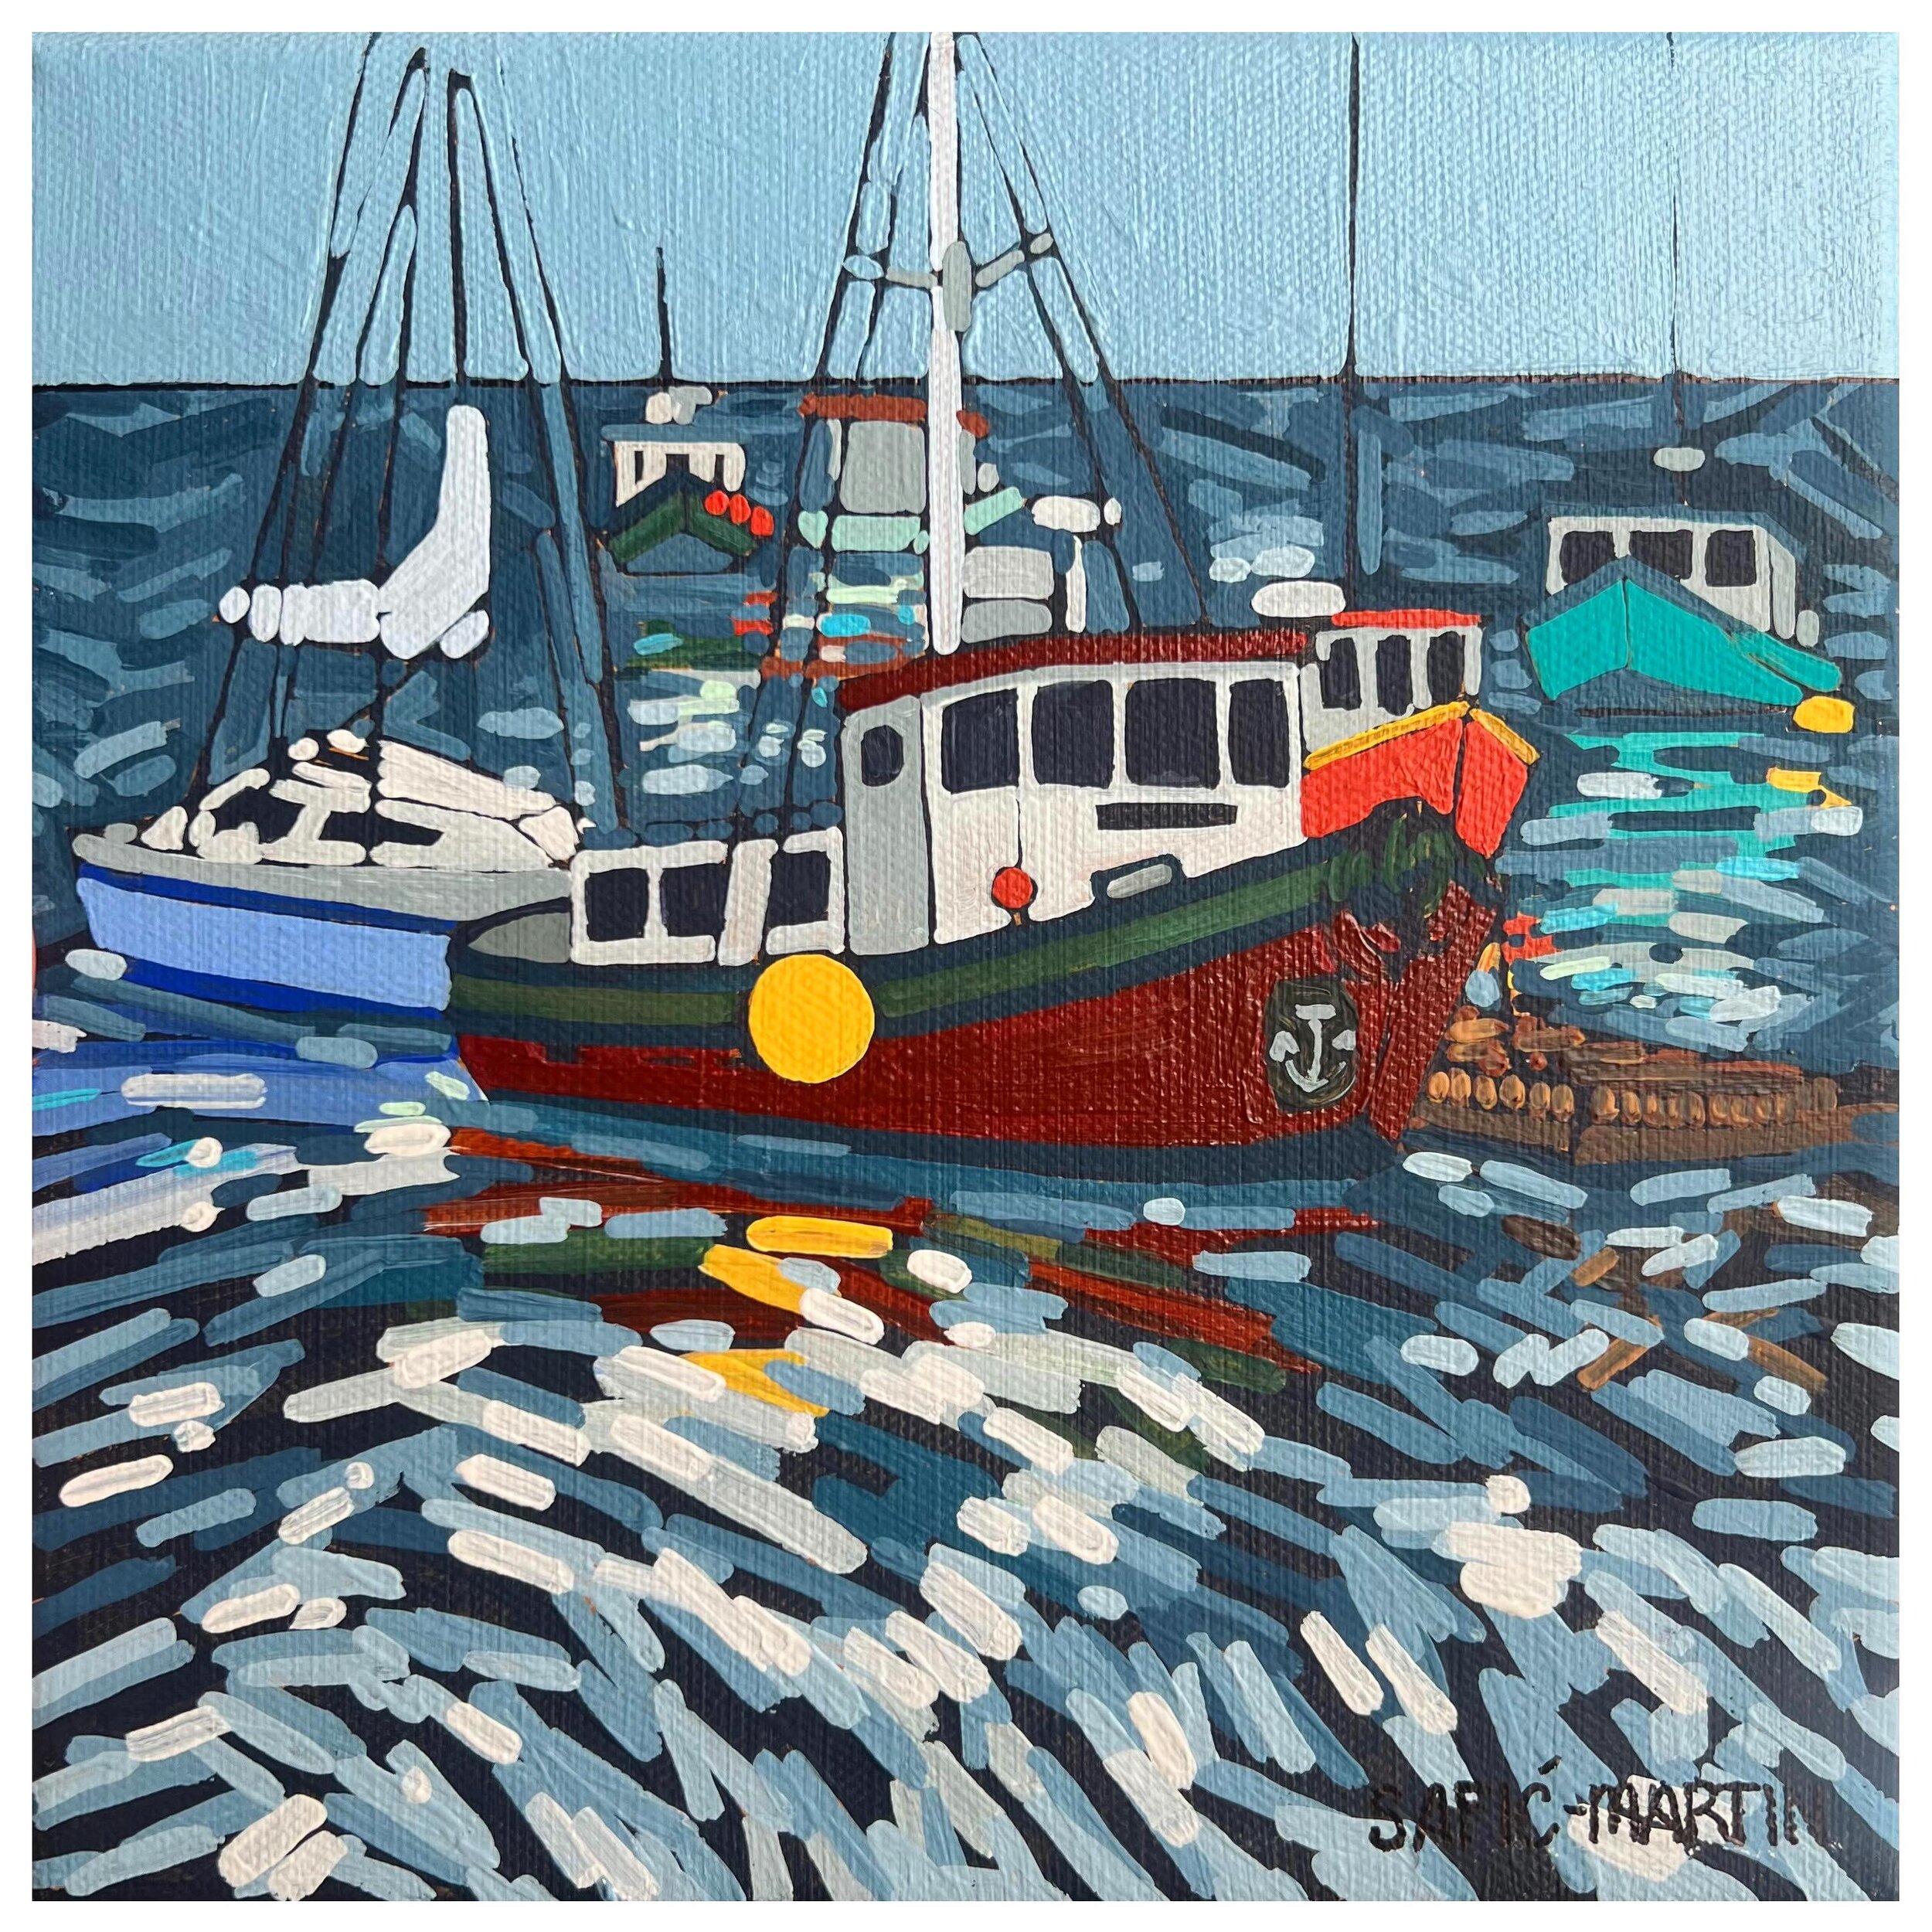 Port Call. Acrylic on 8x8in canvas. $75.00

#tiarasaficmartinart #acryliconcanvas #artoftheday #artofinstagram #artistsoninstagram #artsy #boasts #maine #mainepainting #fishing #fishingboats #affordableart #originalart #liquitex #delrayartisans #spri